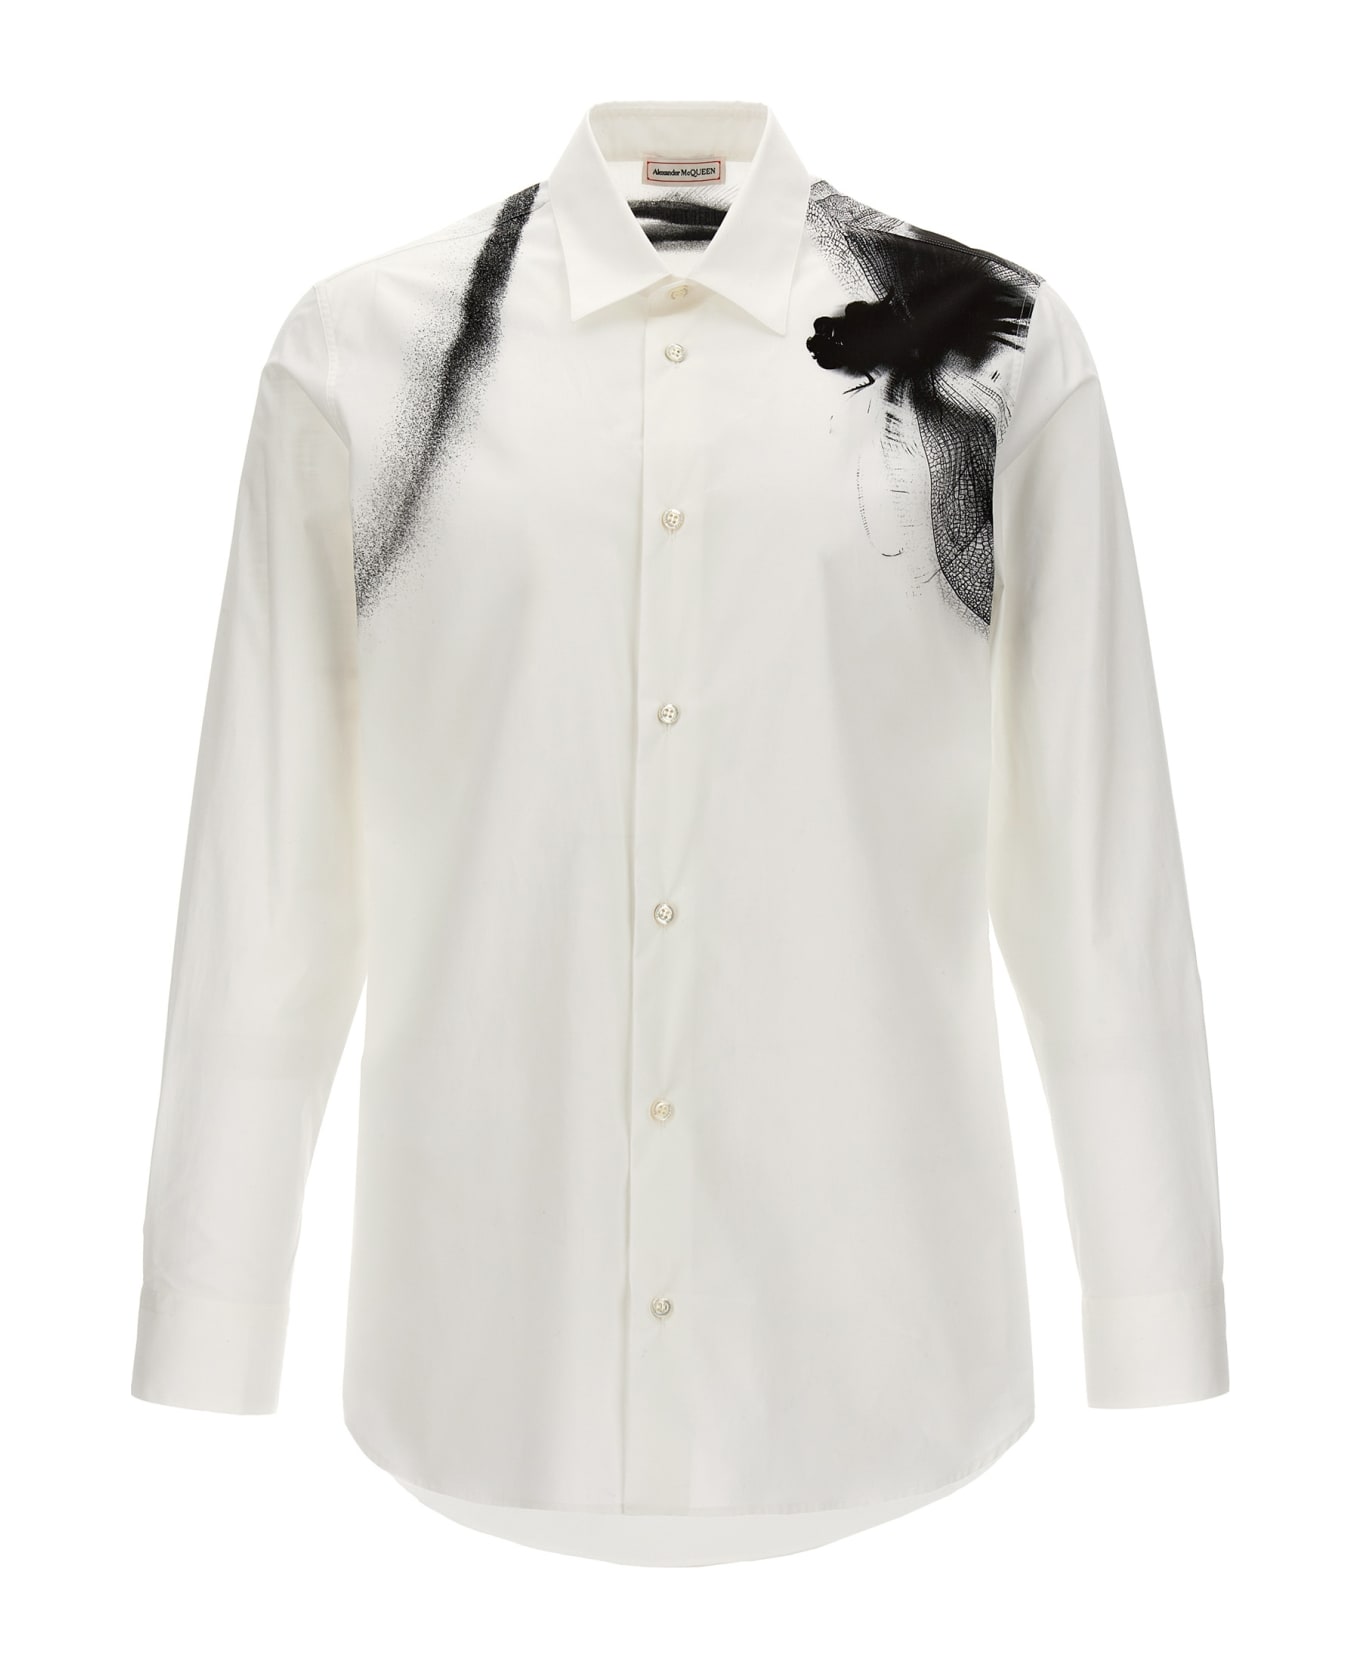 Alexander McQueen Printed Shirt - White Black